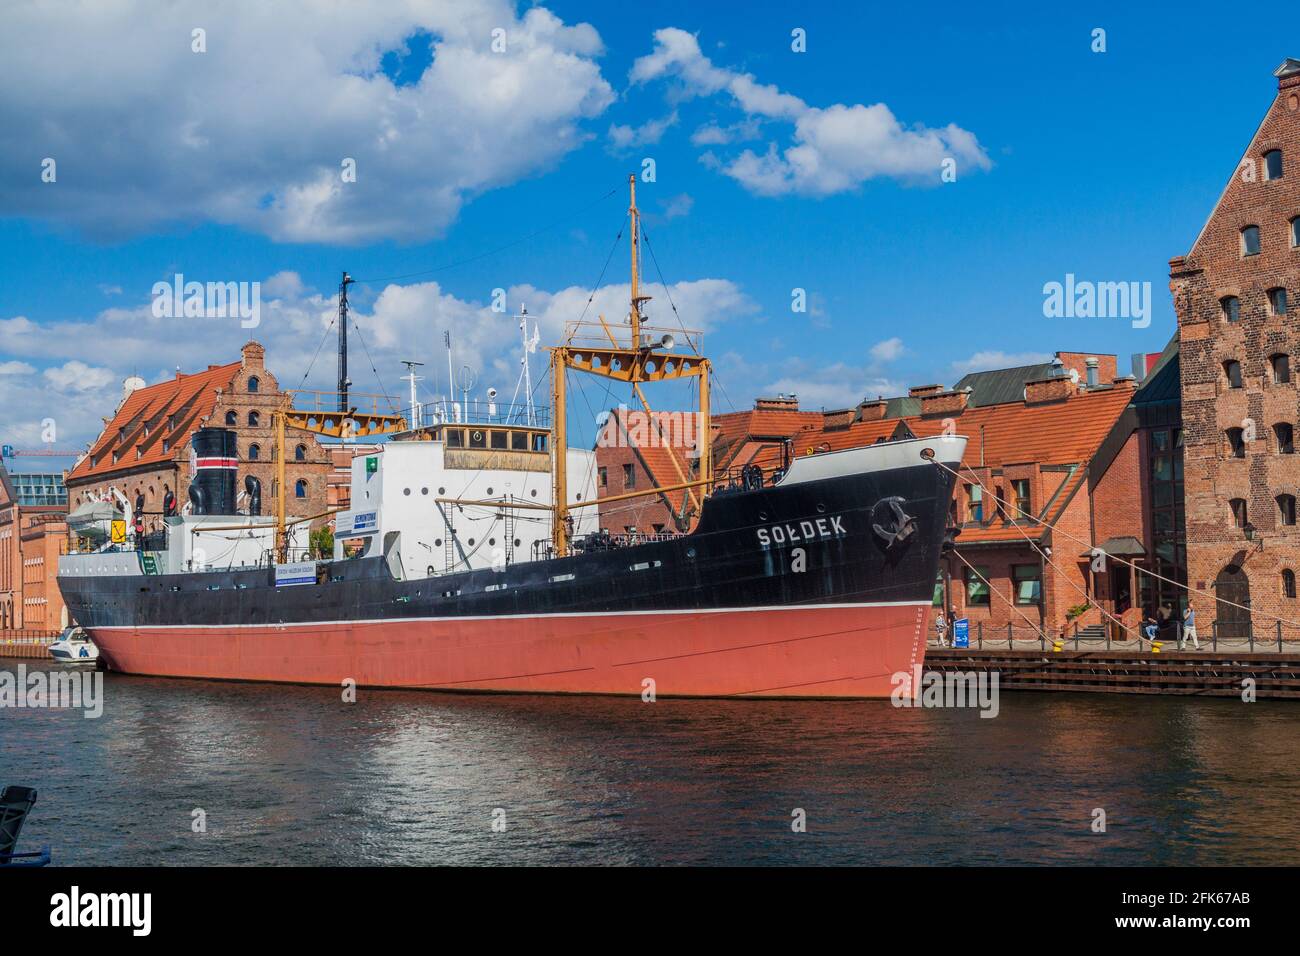 GDANSK, POLAND -  SEPTEMBER 2, 2016: SS Soldek ship on Motlawa river in Gdansk, Poland. She was the first ship built in Poland after World War II. Stock Photo